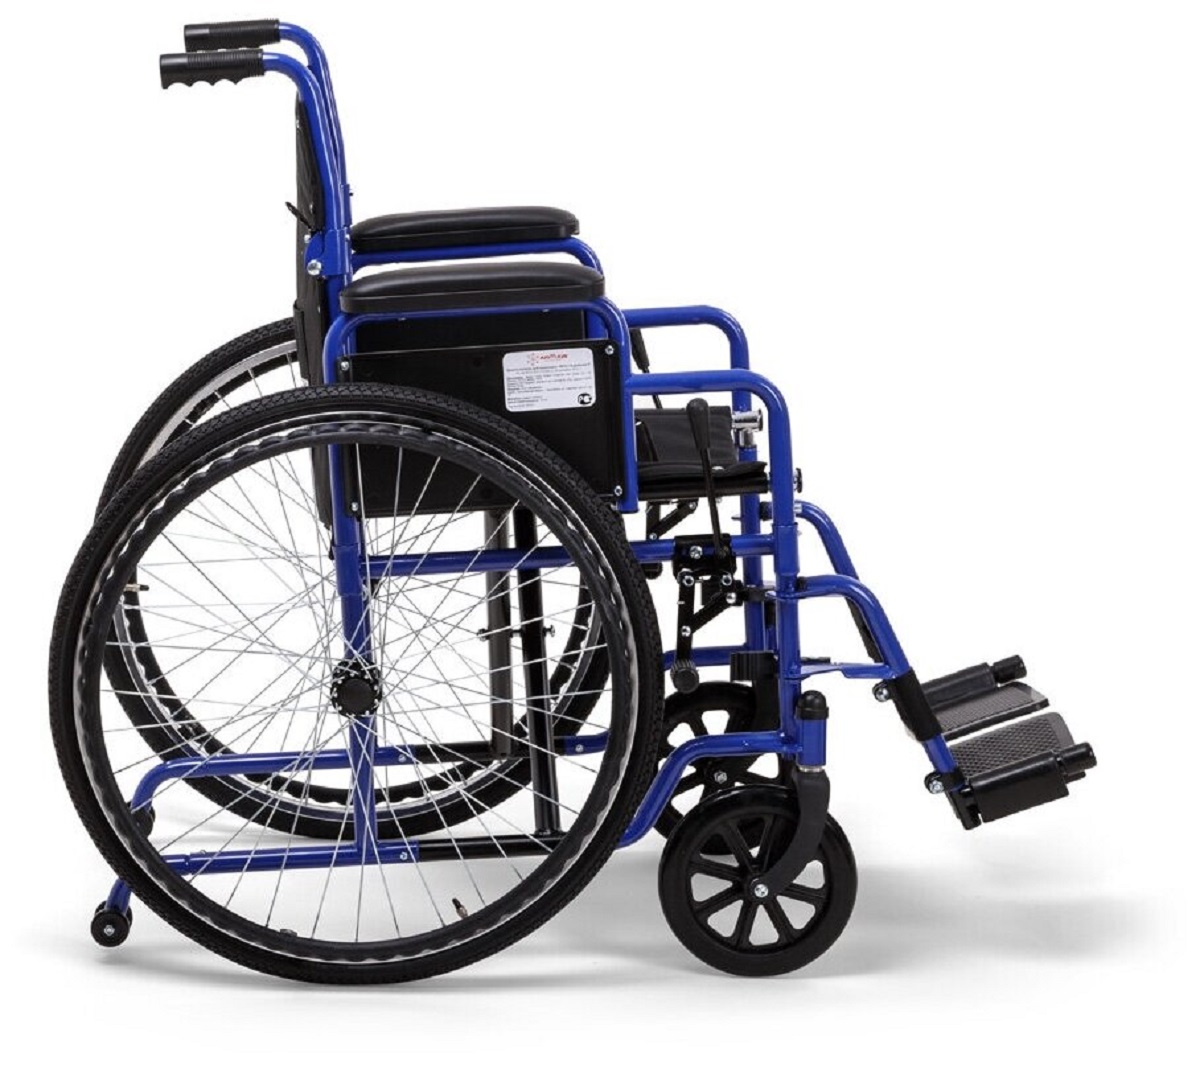 Армед н. Инвалидная коляска h035 Армед. Кресло-коляска н035 Армед. Кресло-коляска для инвалидов Армед h 035. Кресло коляска для инвалидов Армед н035.